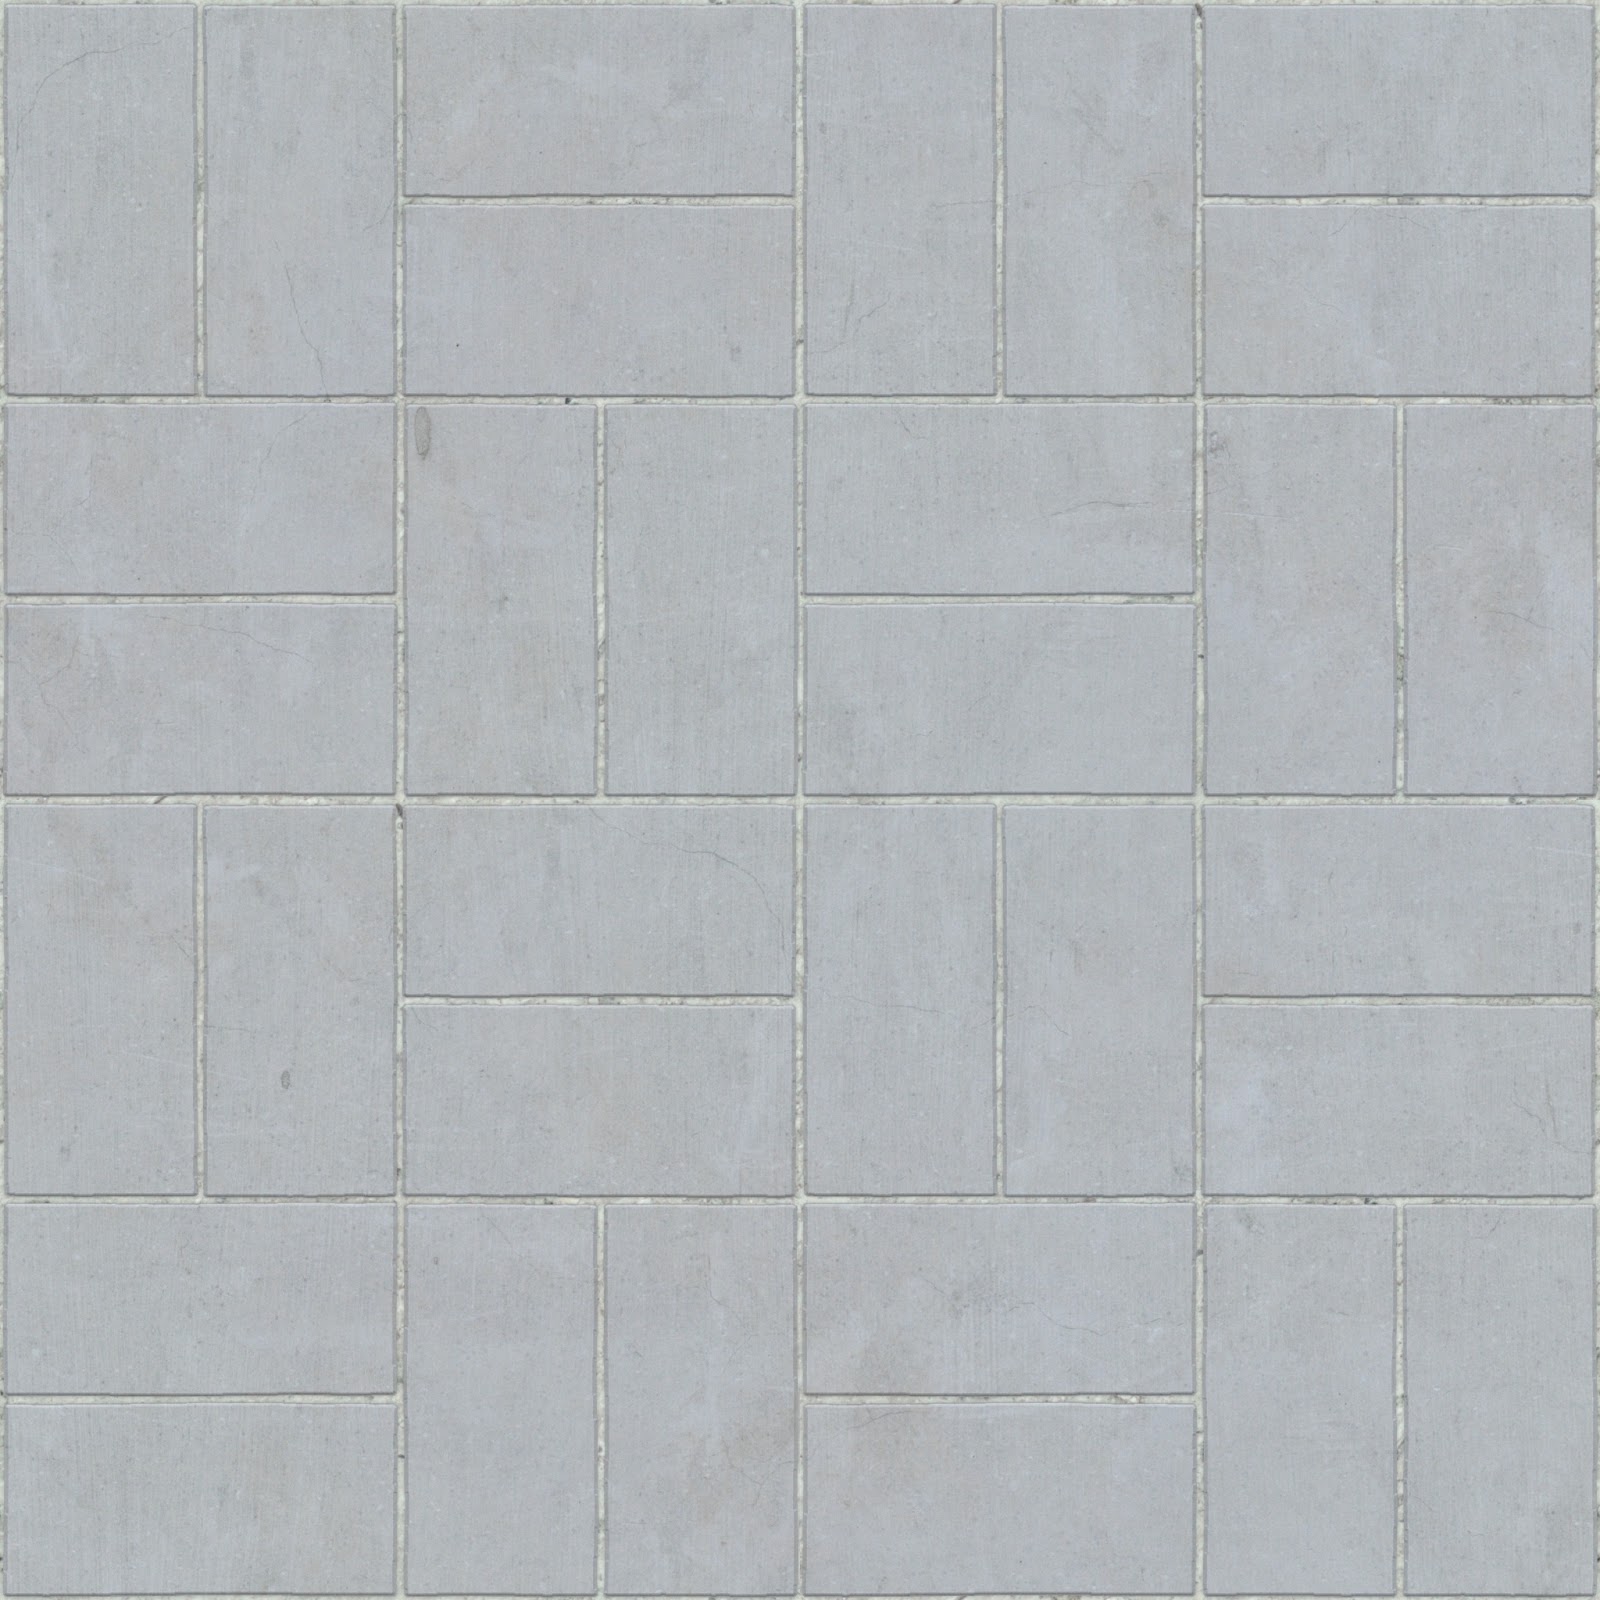 Brick smooth tiles seamless texture 2048x2048